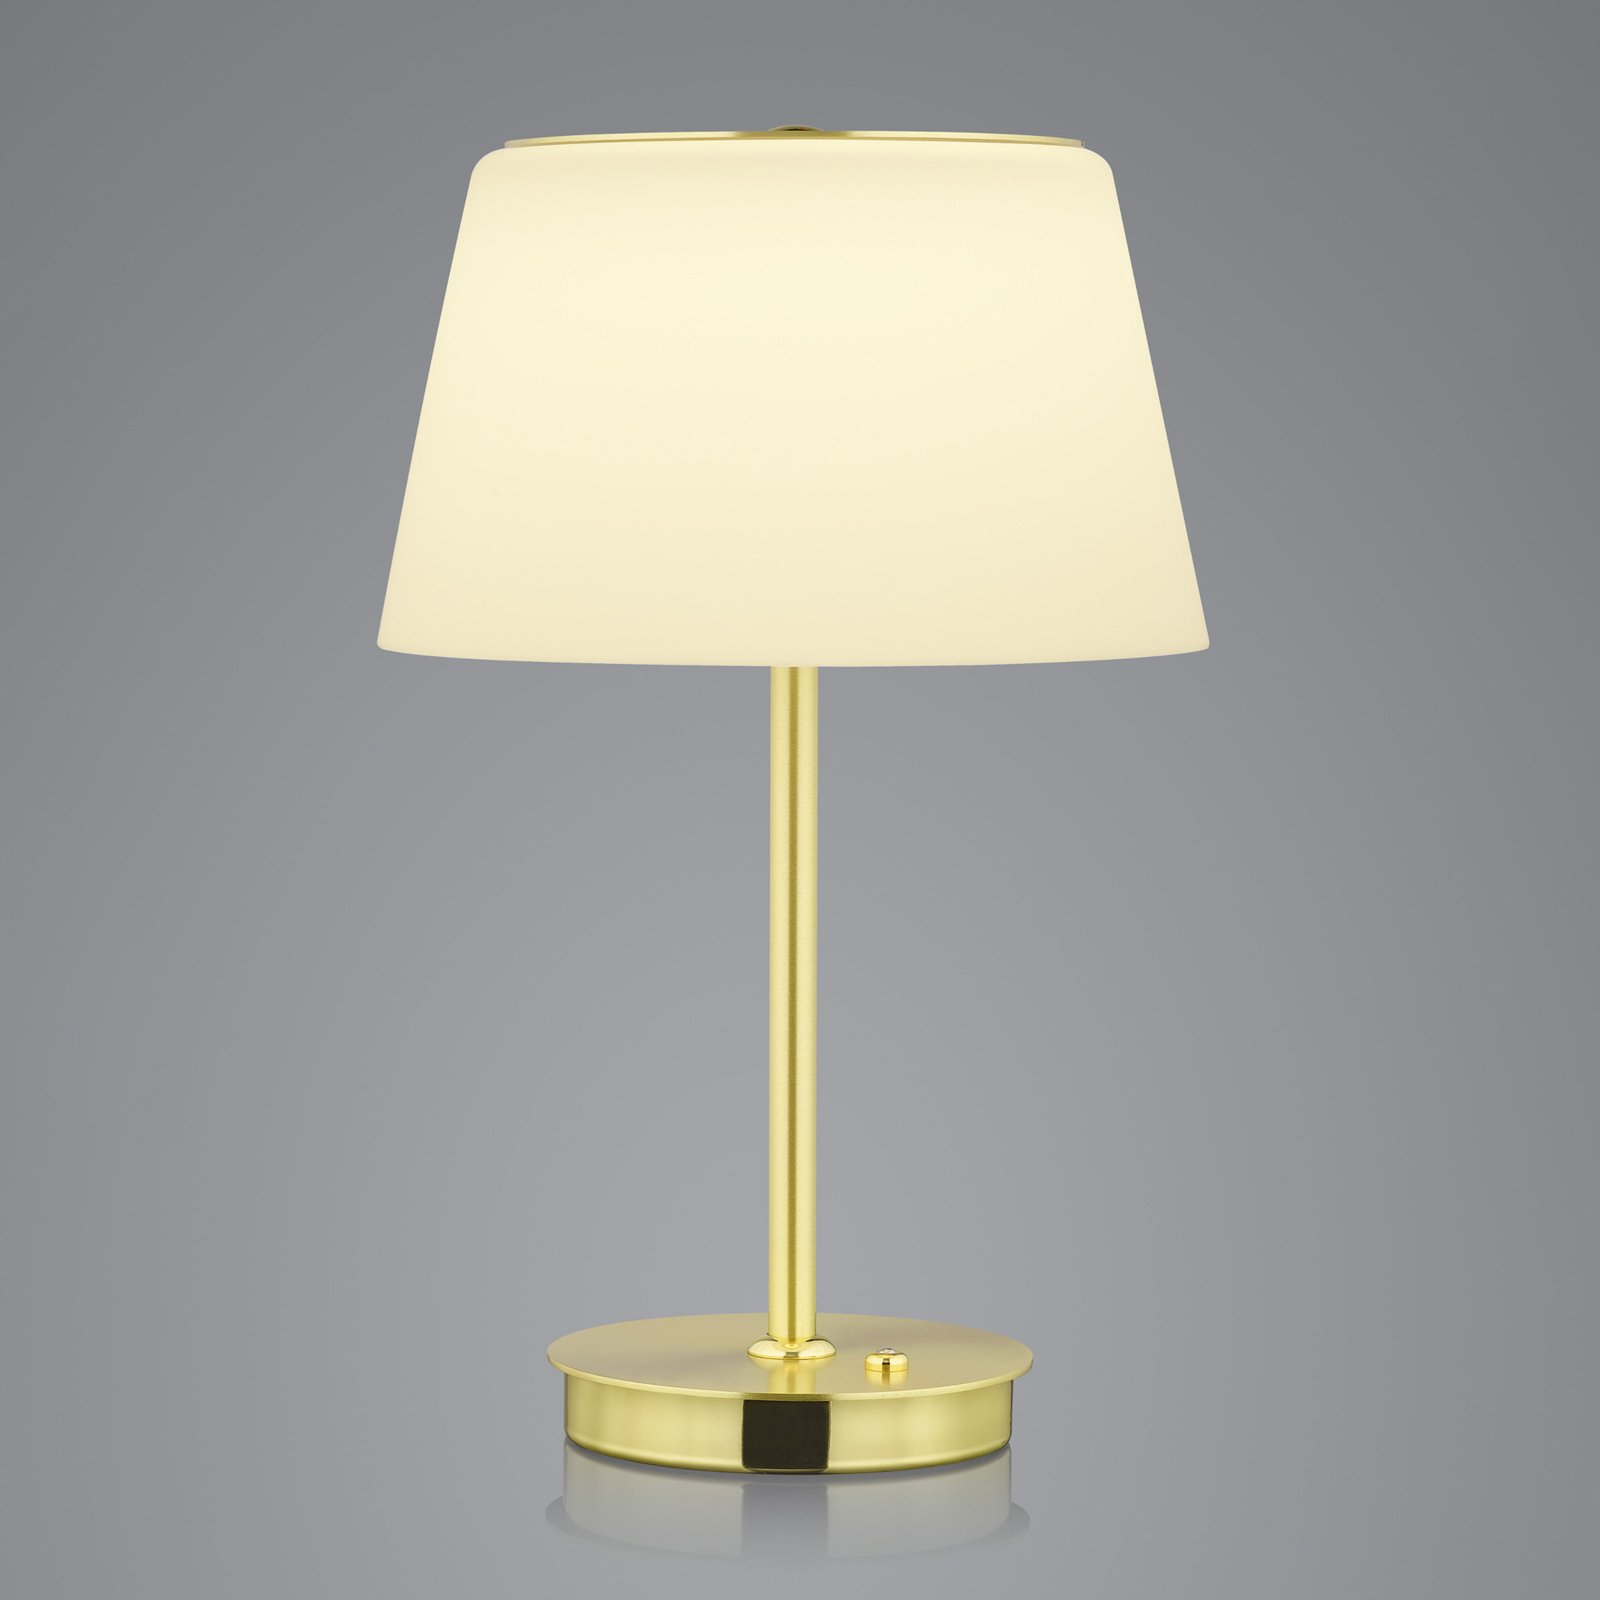 BANKAMP Conus LED table lamp, brass